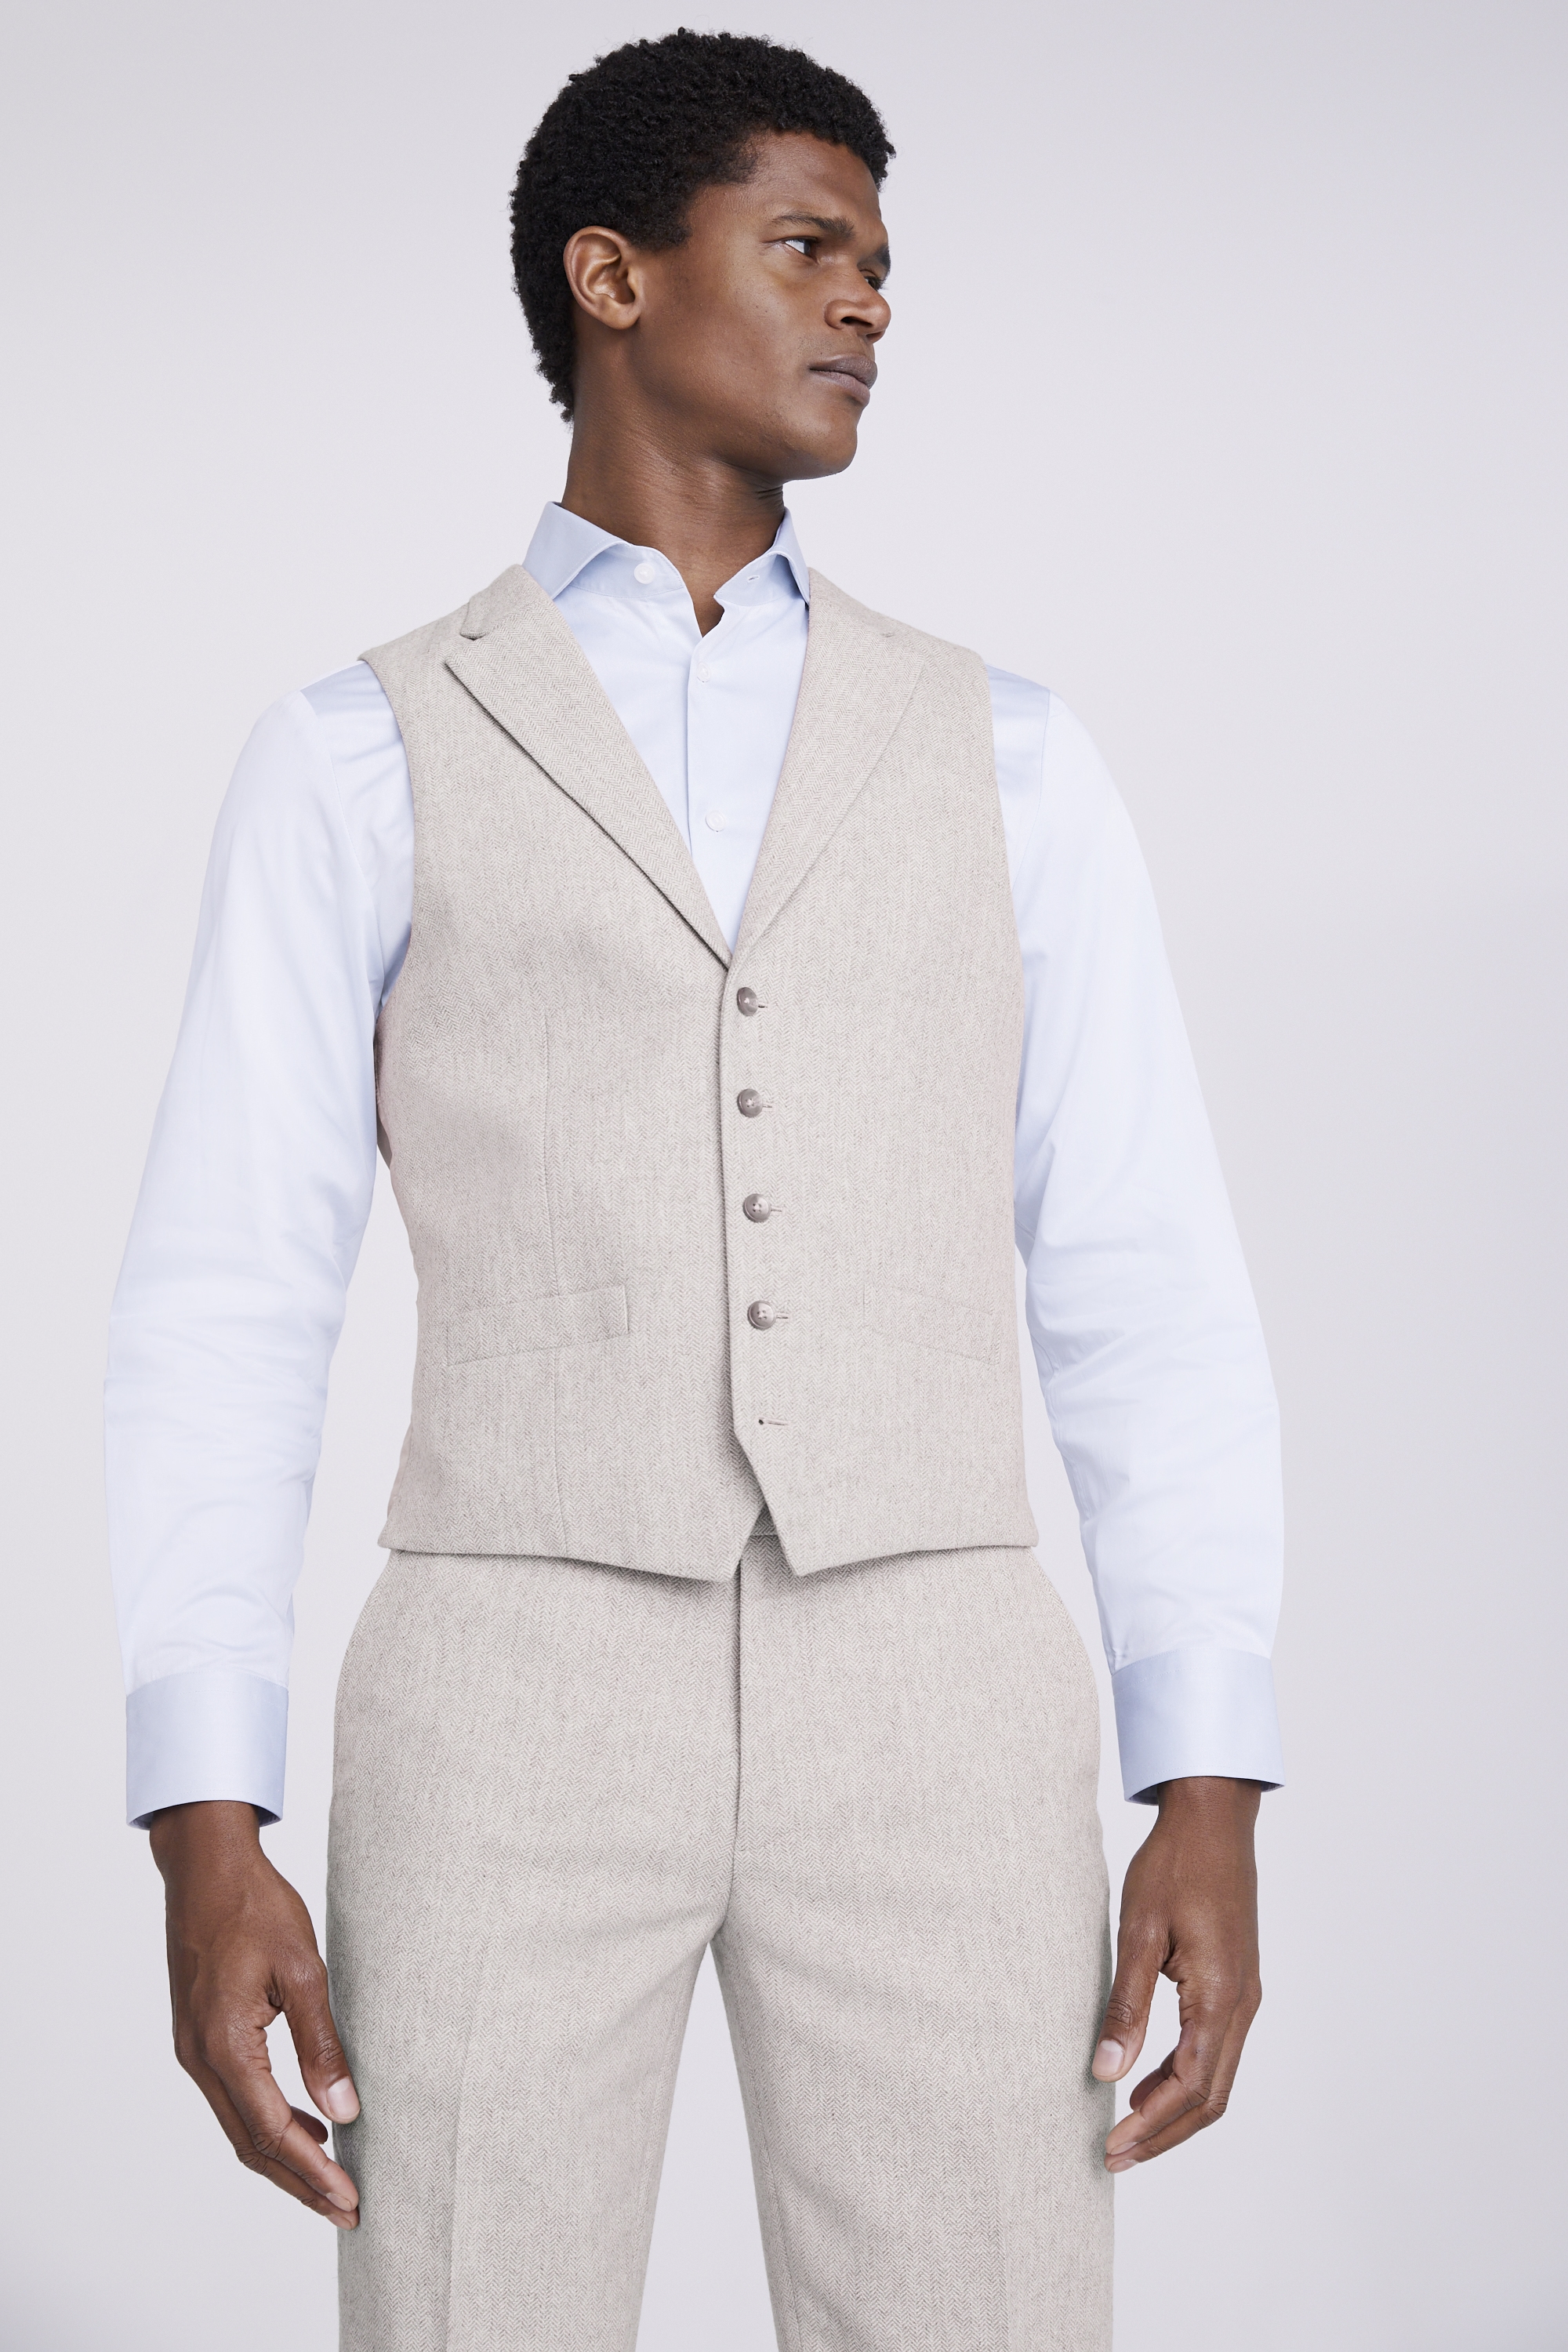 Tailored Fit Light Grey Herringbone Jacket | Buy Online at Moss